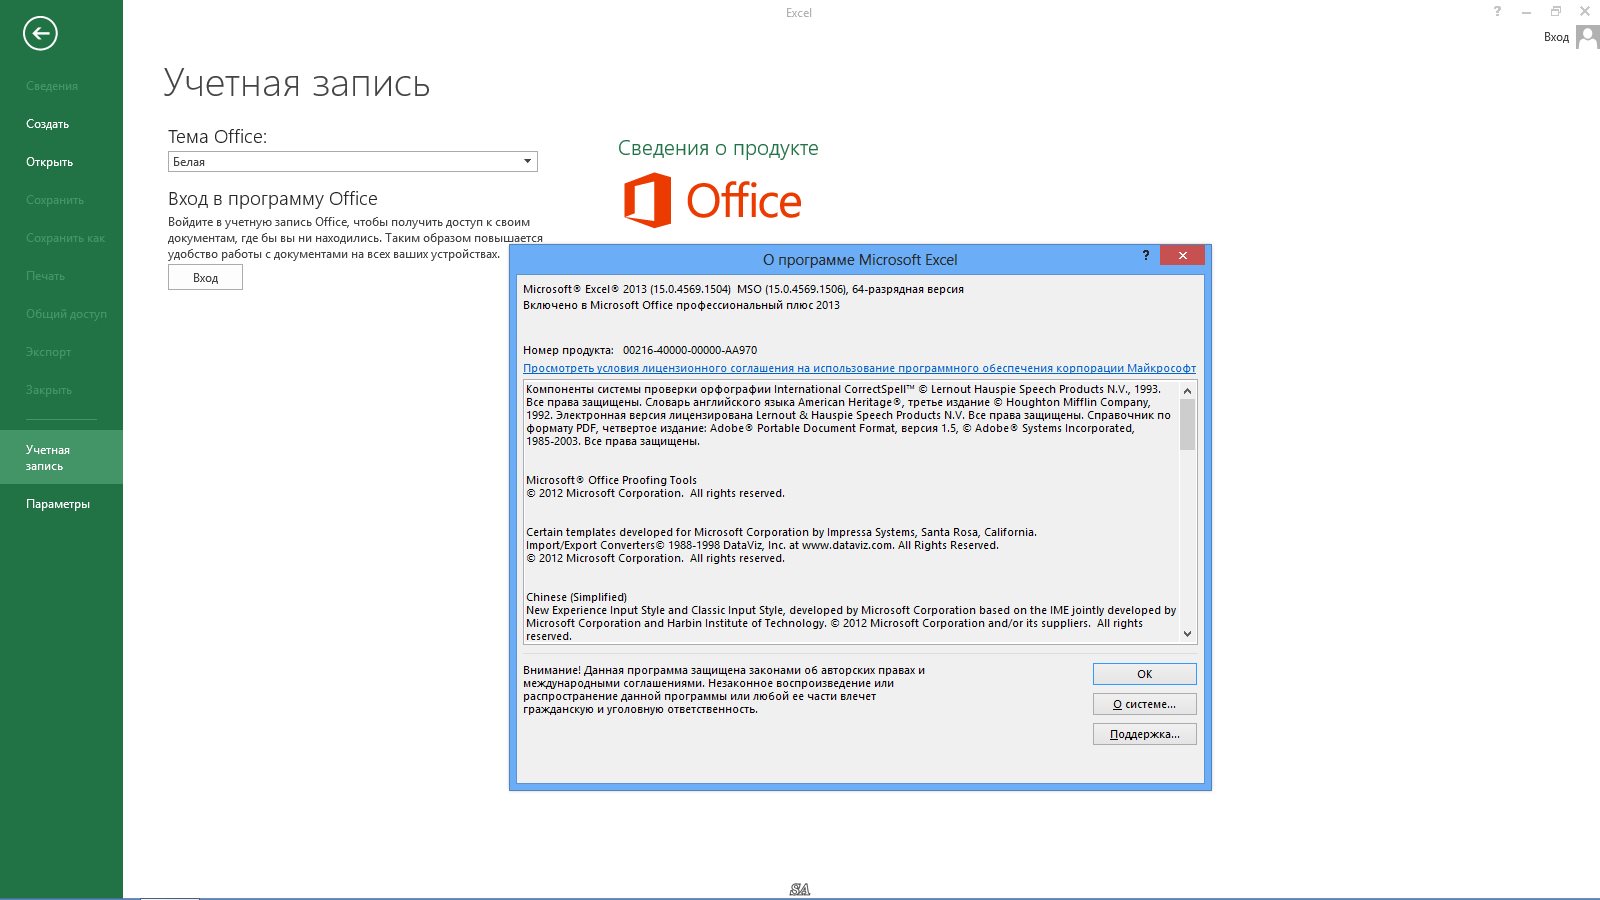 Microsoft Office 2013 Professional Plus SP1 VL 15.0.4569.1506